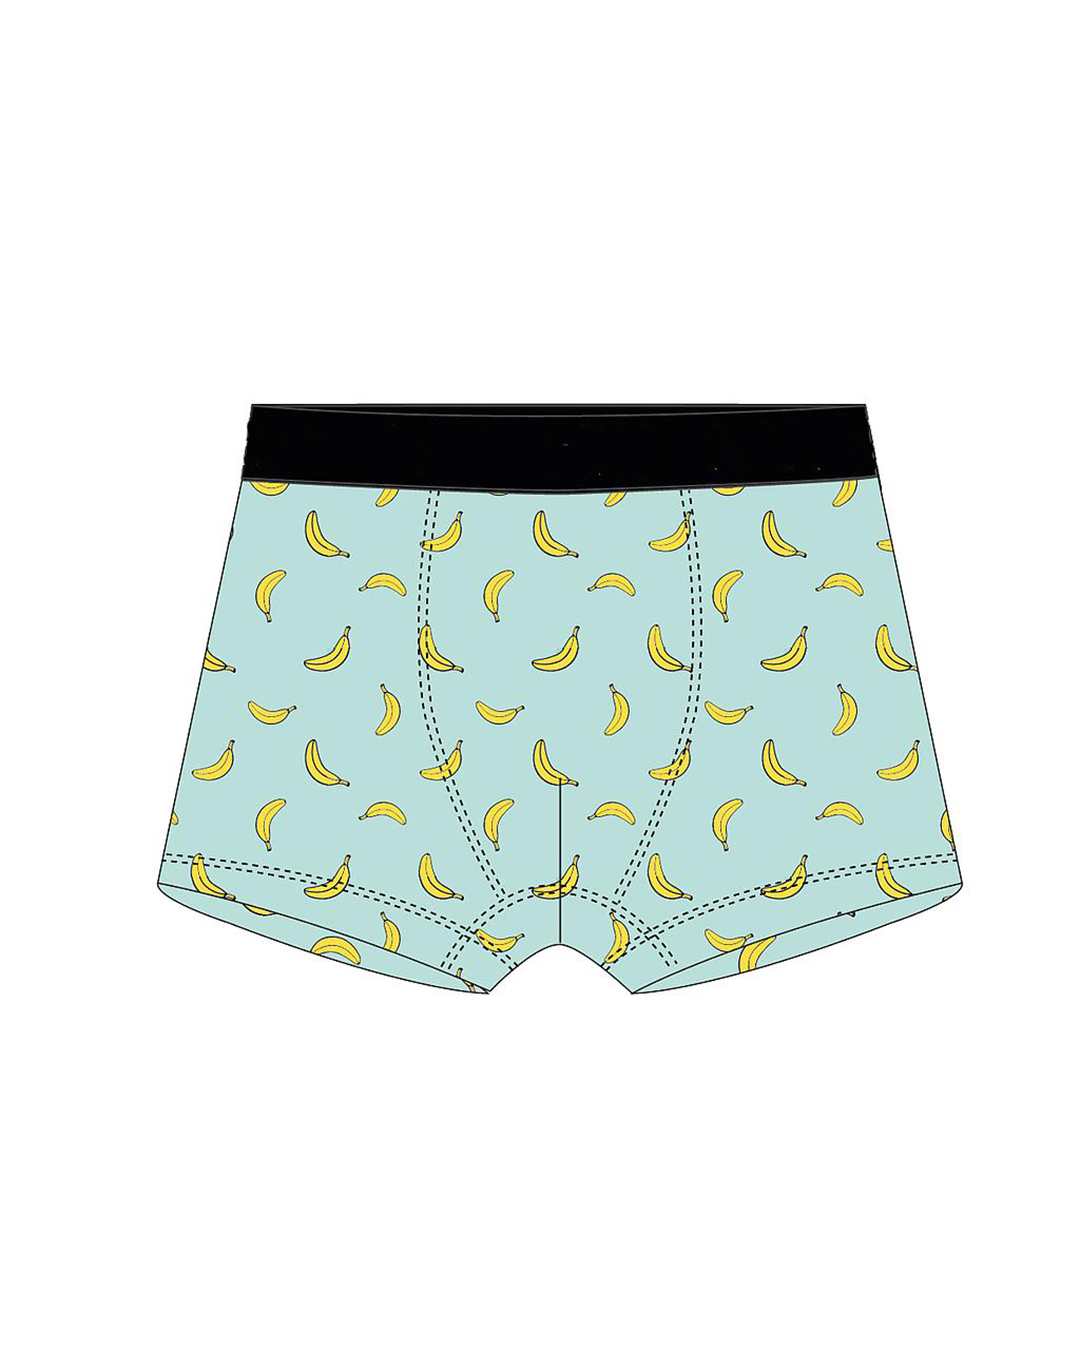 Banana print men's boxer